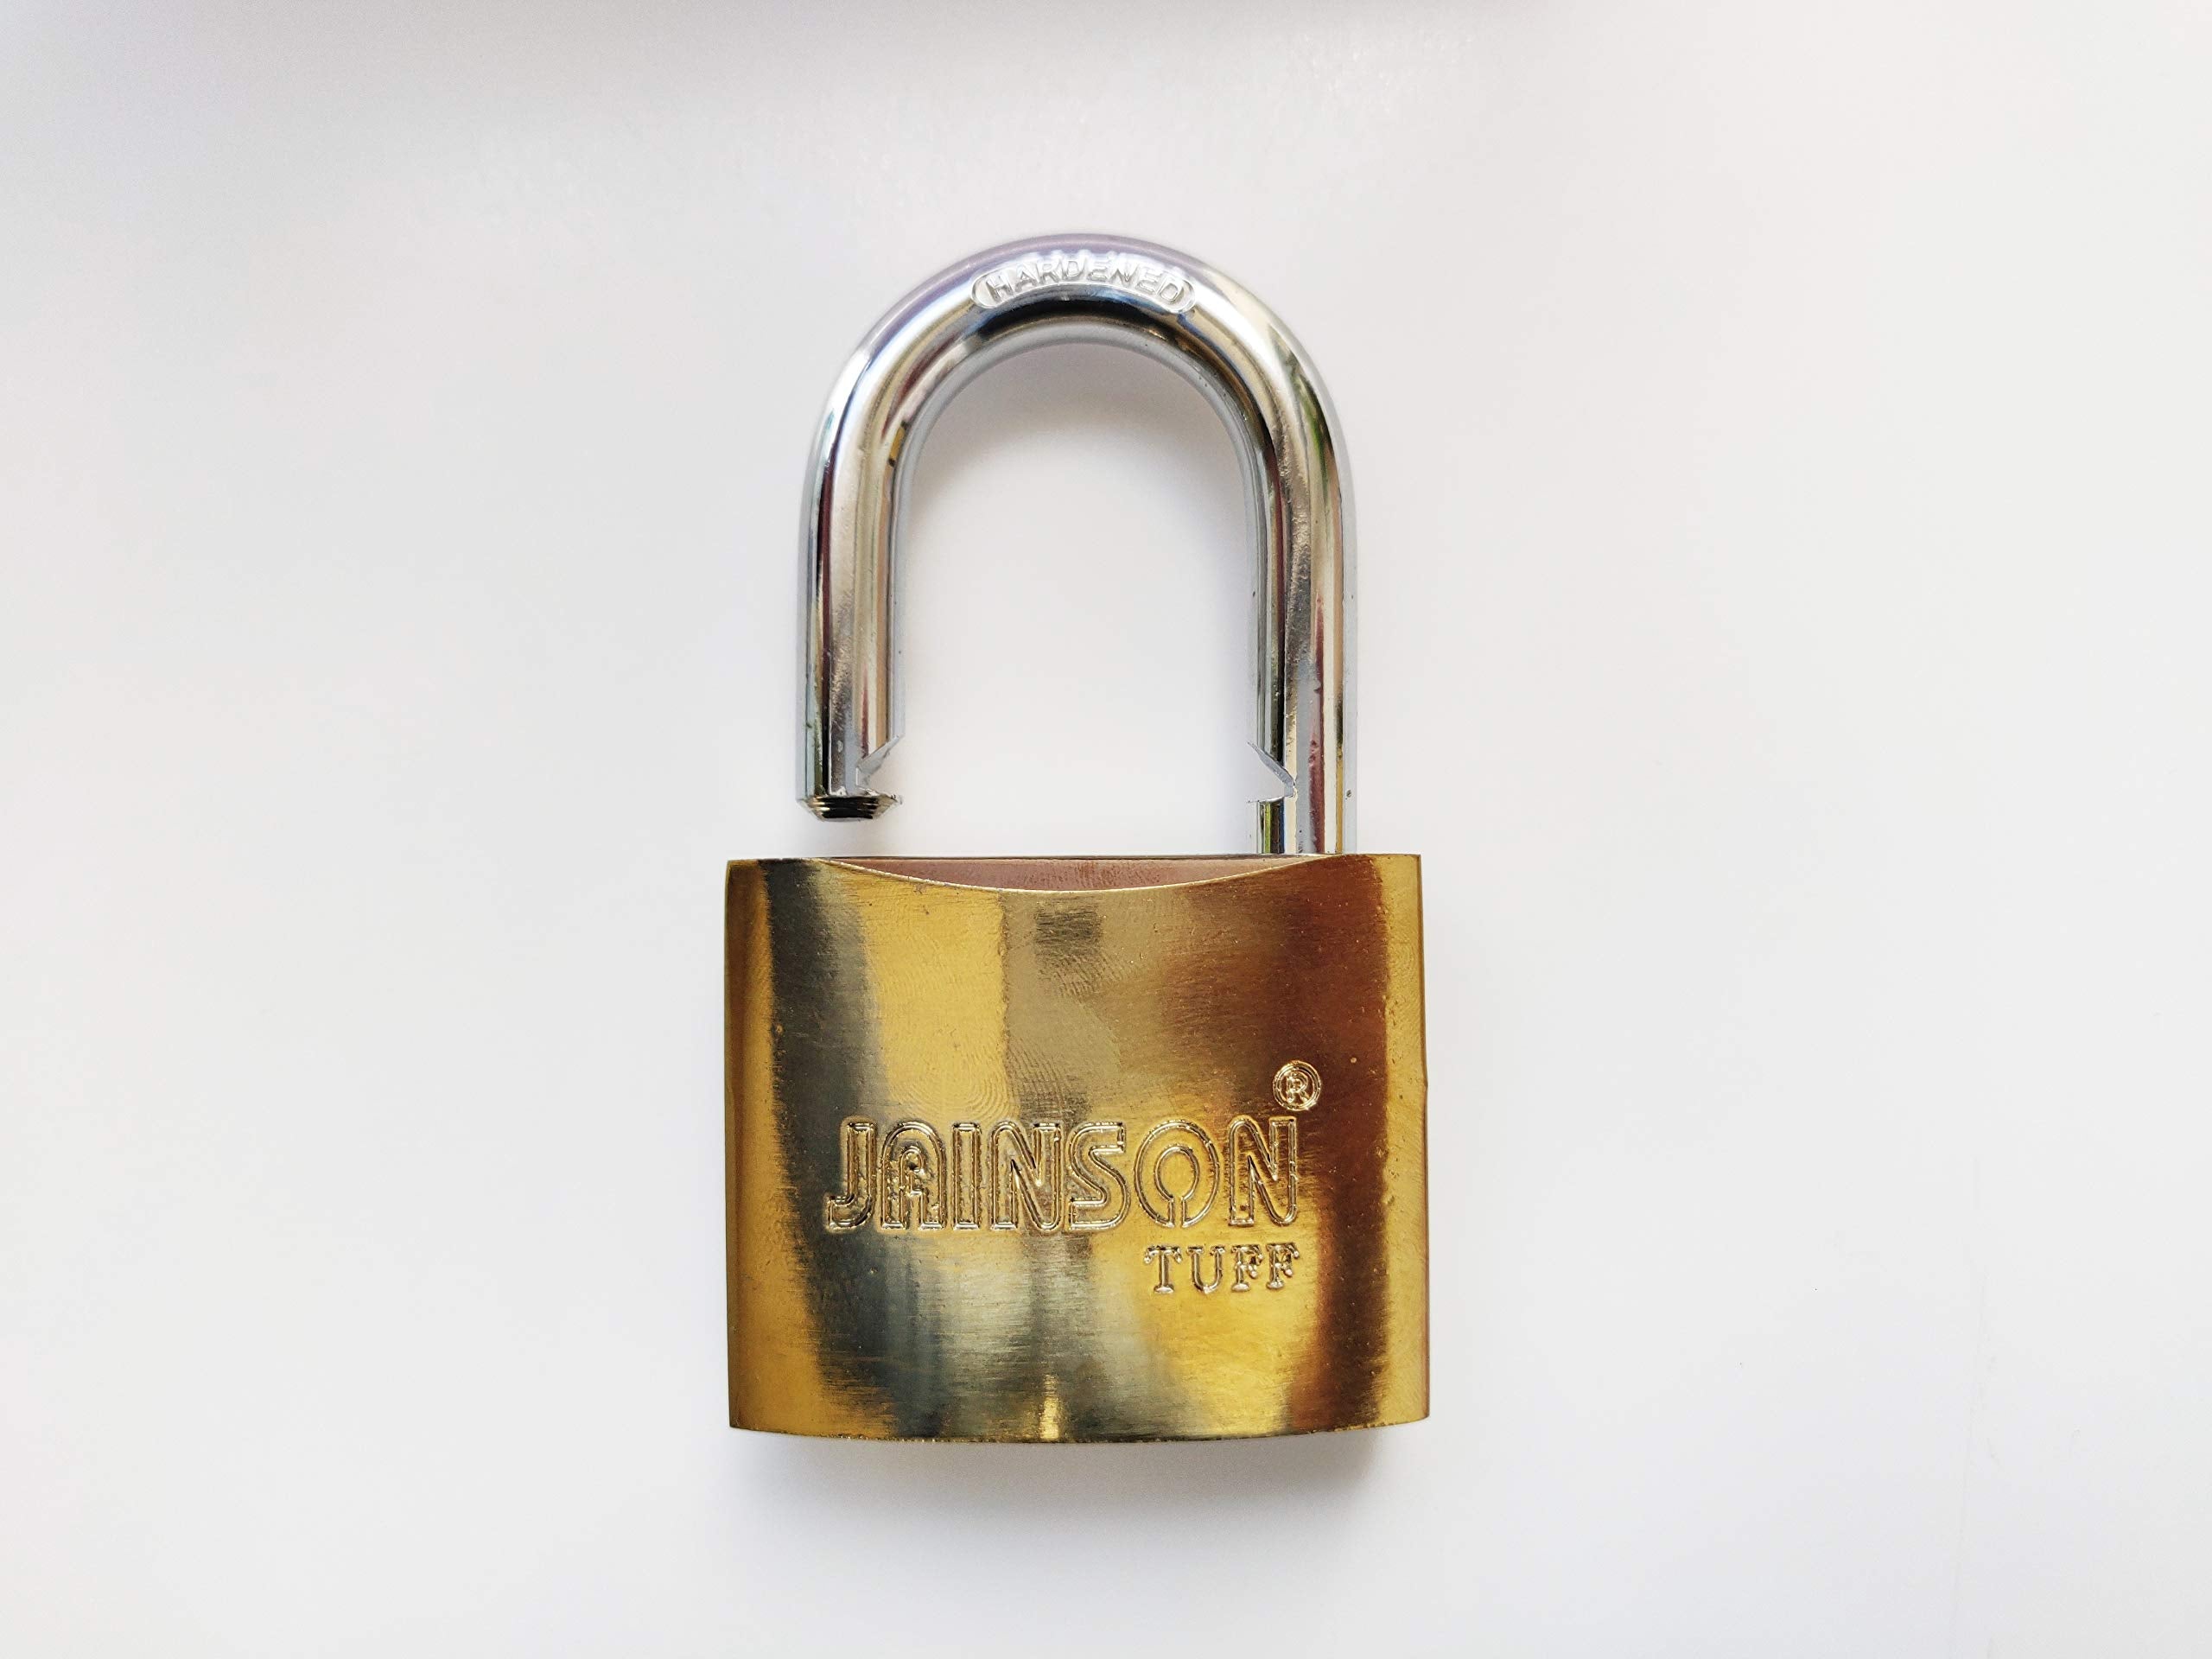 Jainson Locks Tuff Brass Plated Padlock (63mm) (Double Locking & Hardened Shackle) with 3 Cylindrical Keys